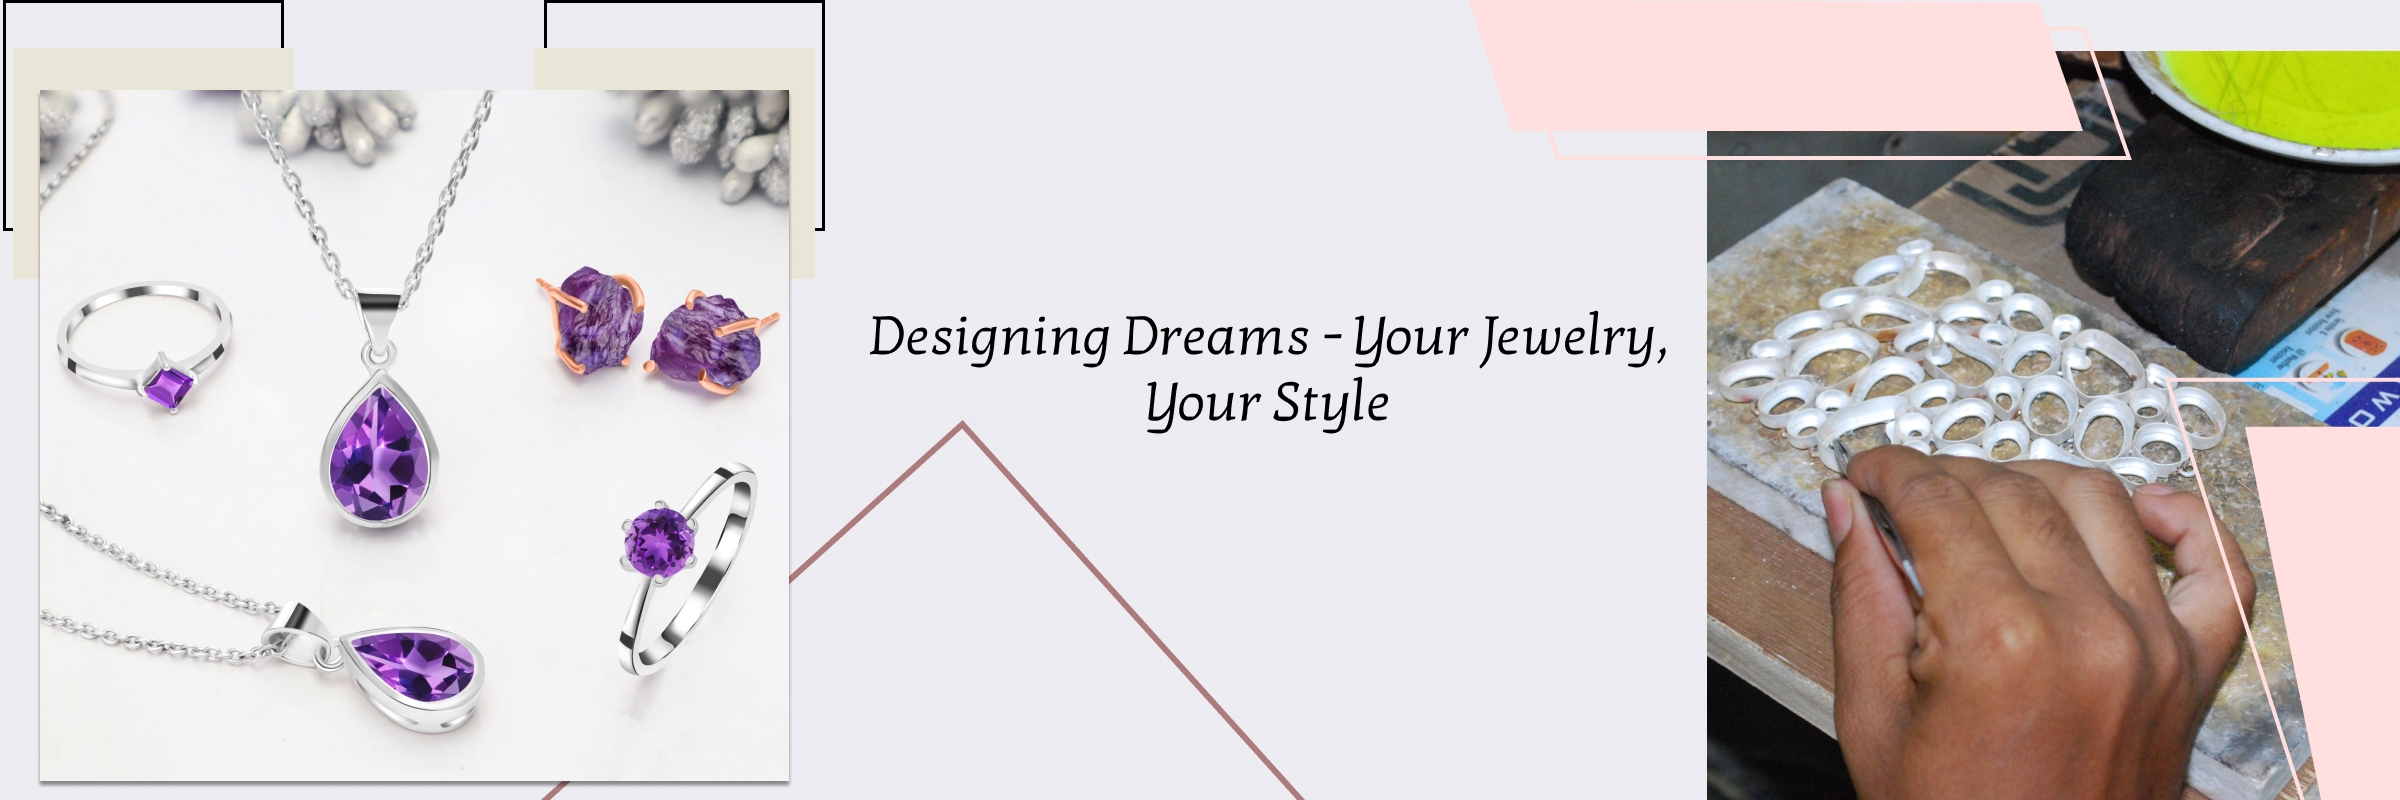 Designer Jewelry Tips & Ideas